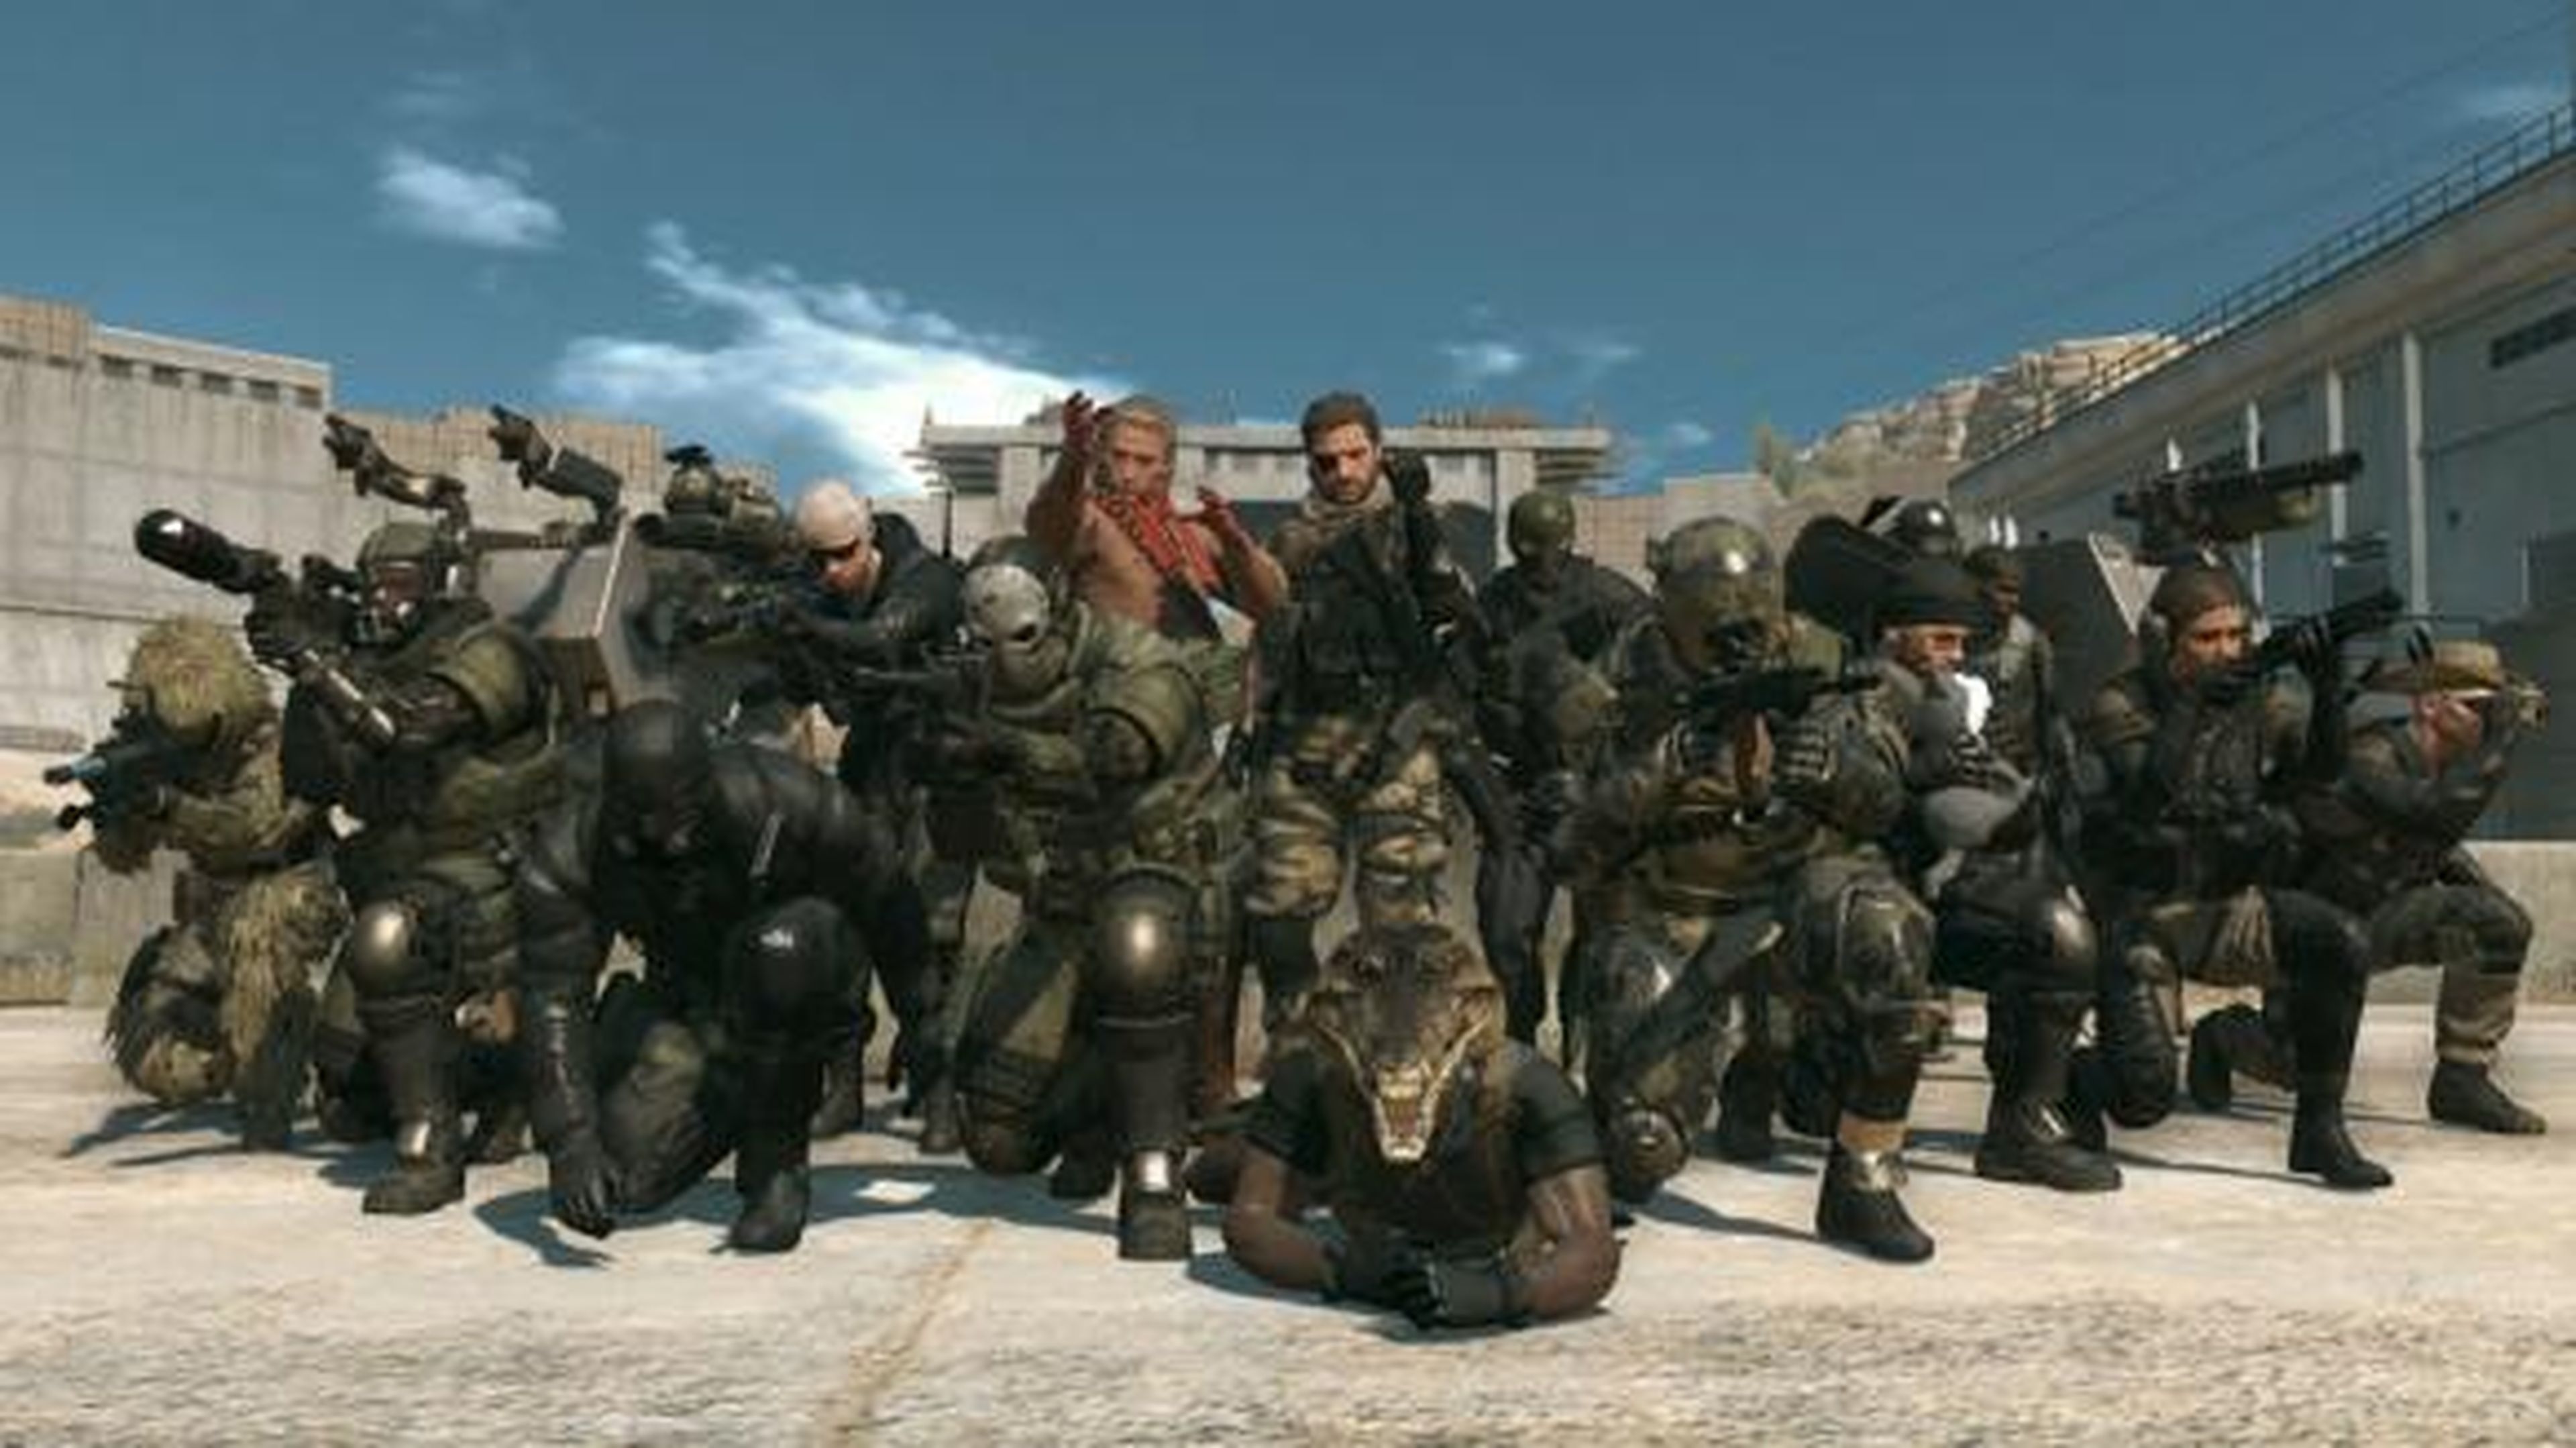 TGS 2015: Metal Gear Online, gameplay, fecha, misiones, mapas y clases